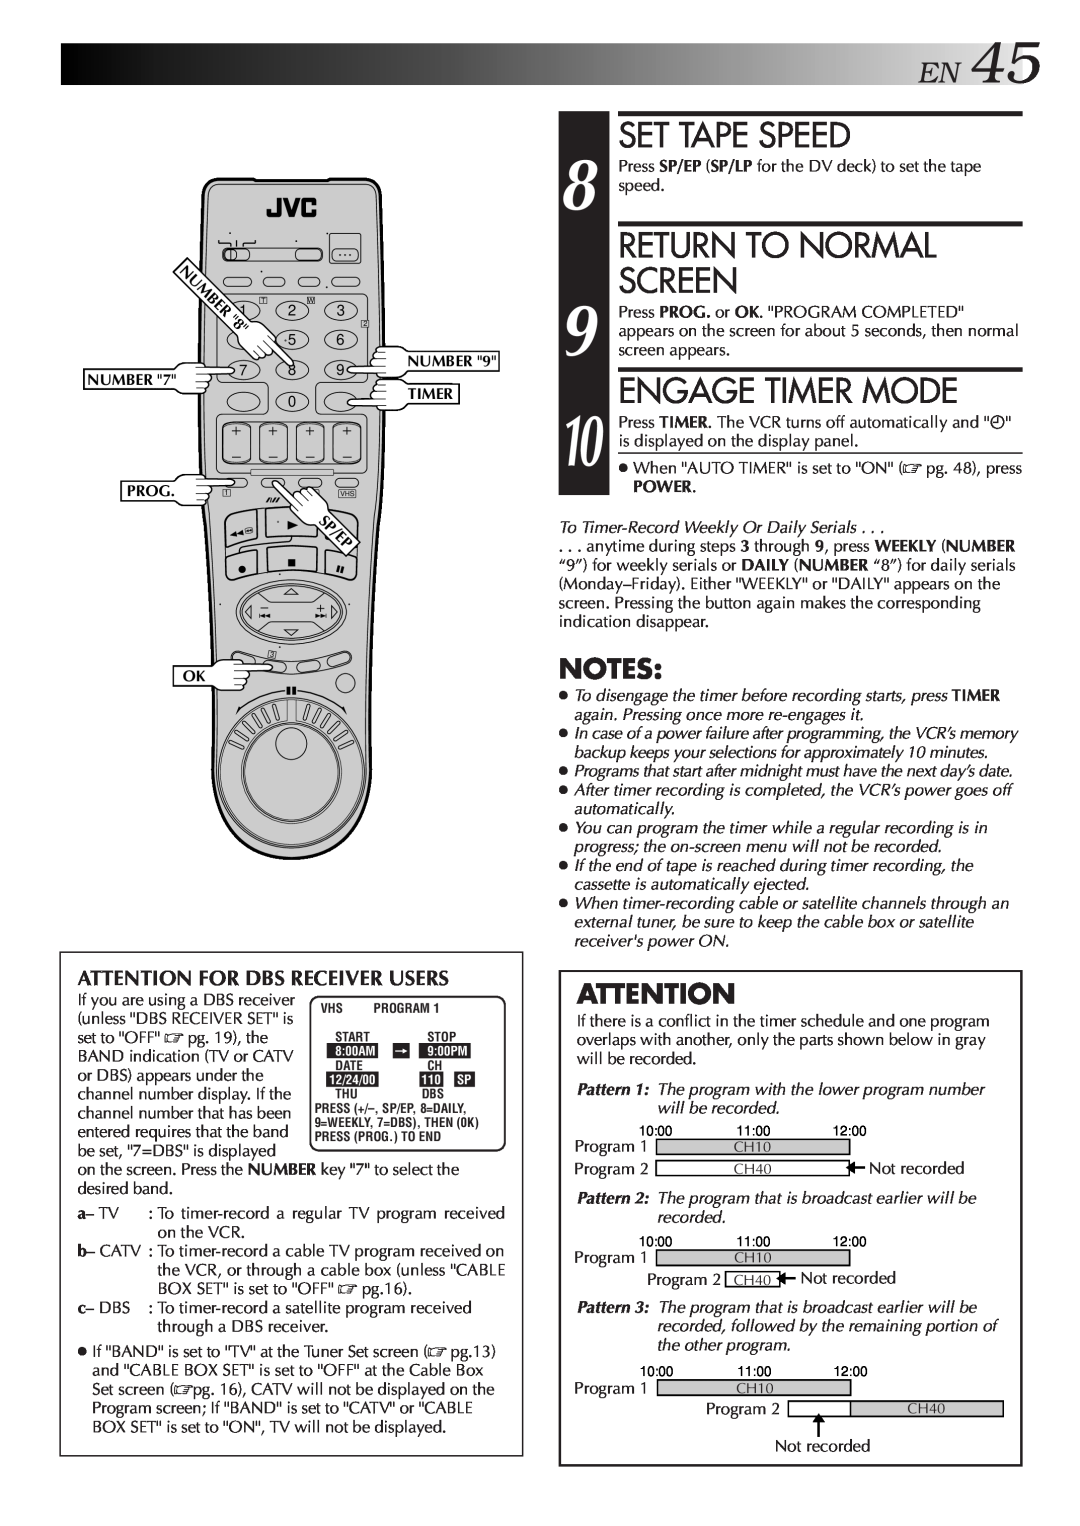 JVC Model HR-DVS1U manual EN45, S P/Ep, Set Tape Speed, Return To Normal, Screen, Engage Timer Mode, Power 